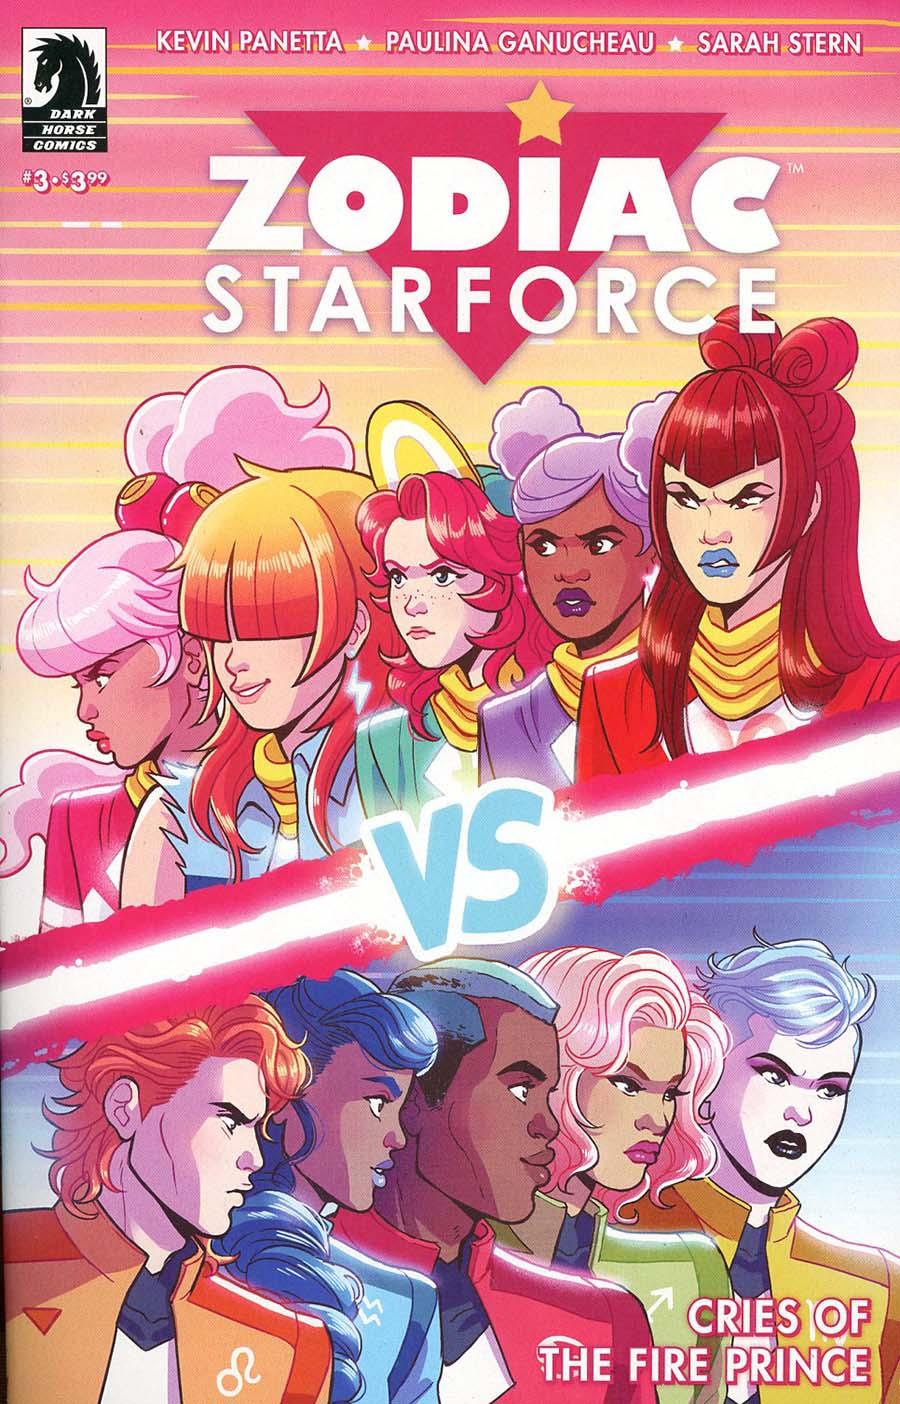 Zodiac Starforce Cries Of The Fire Prince Vol. 1 #3